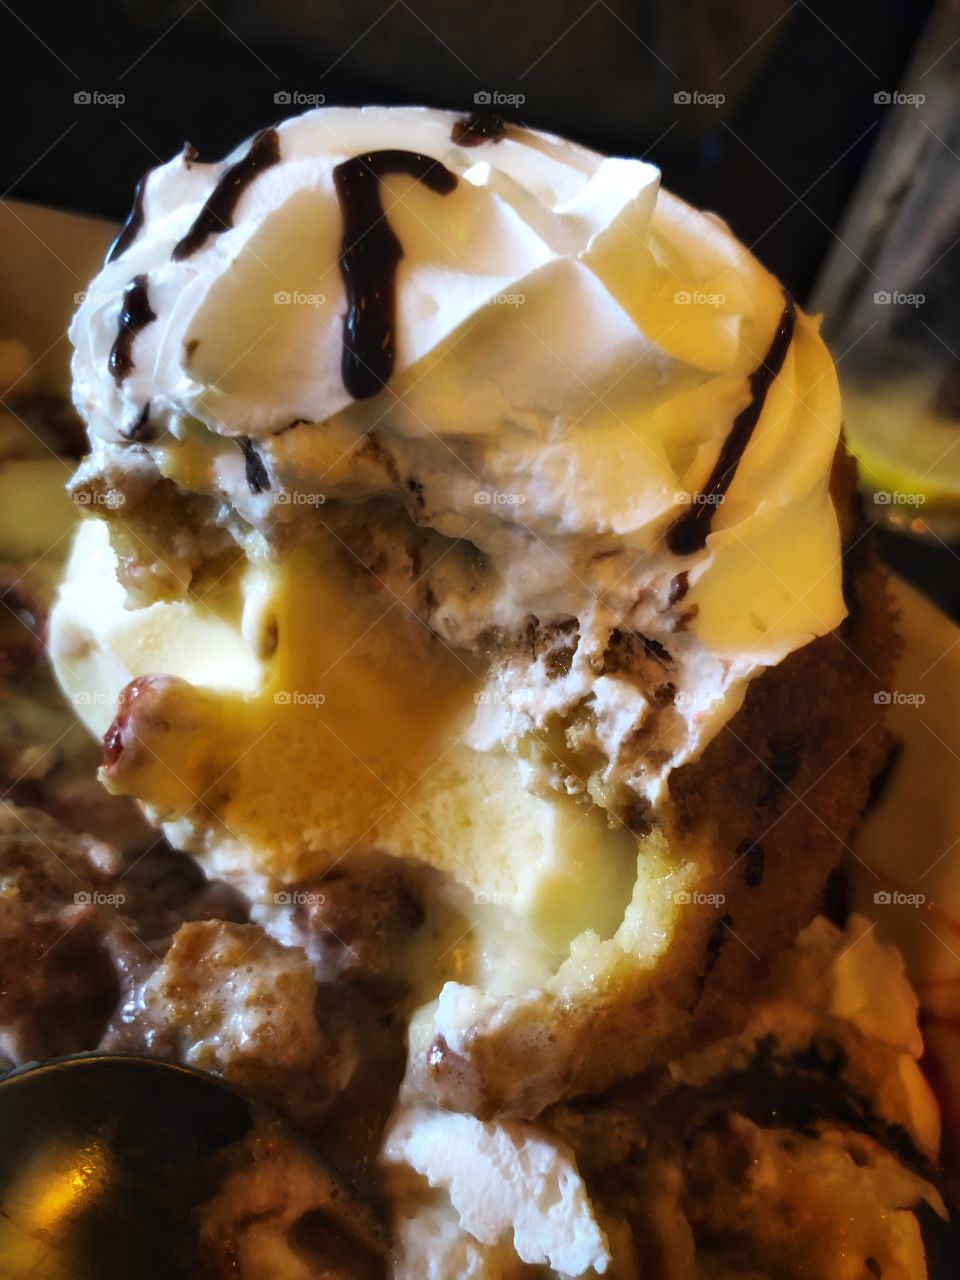 Fried Vanilla Ice Cream. Who knew? 😁